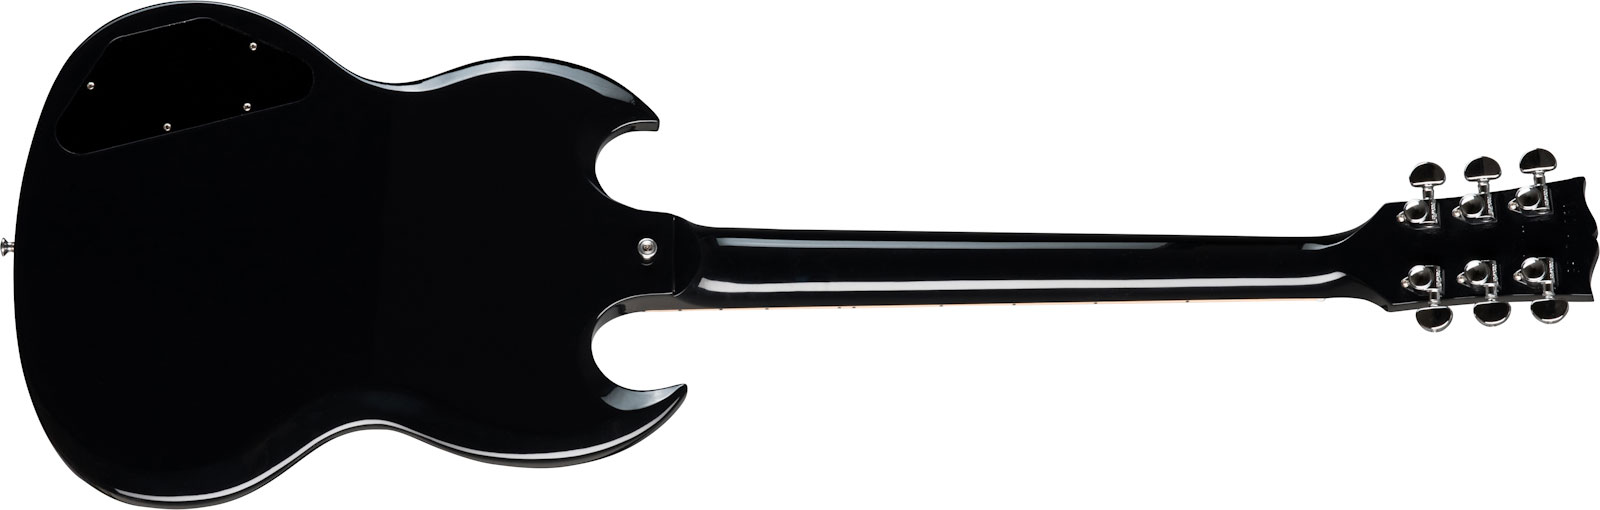 Gibson Sg Standard 2h Ht Rw - Ebony - Guitarra eléctrica de doble corte. - Variation 1